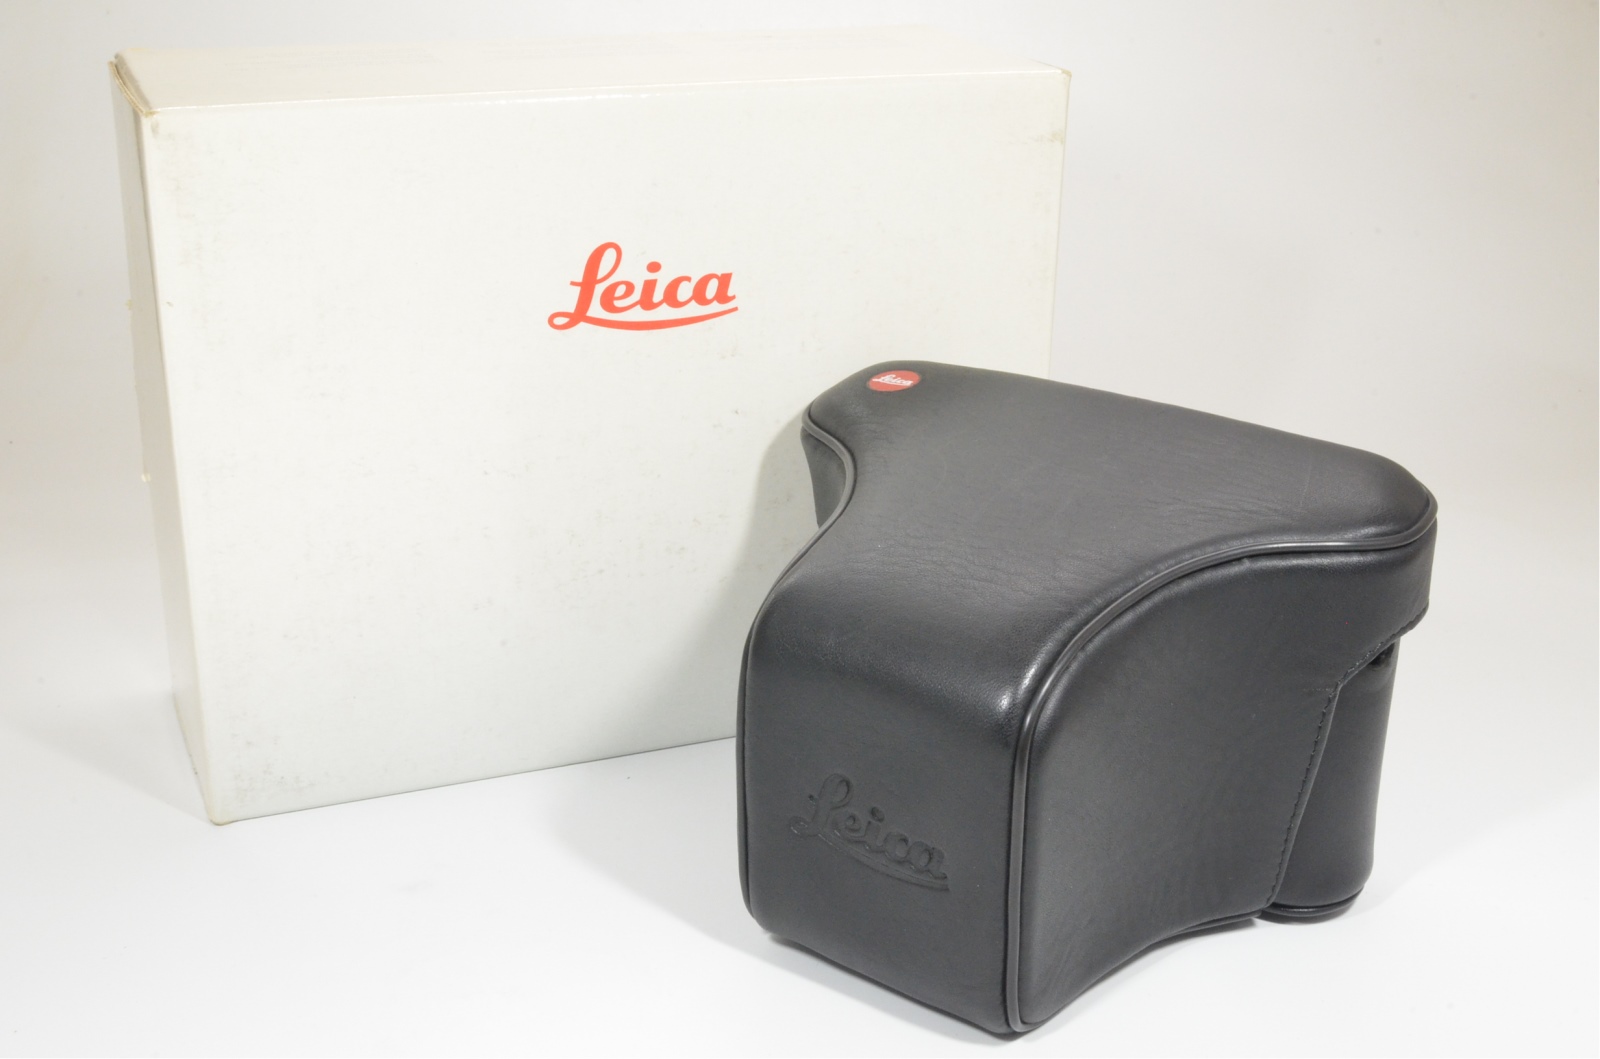 leica m6 0.72 black rangefinder serial no.1779265 year 1990 with case